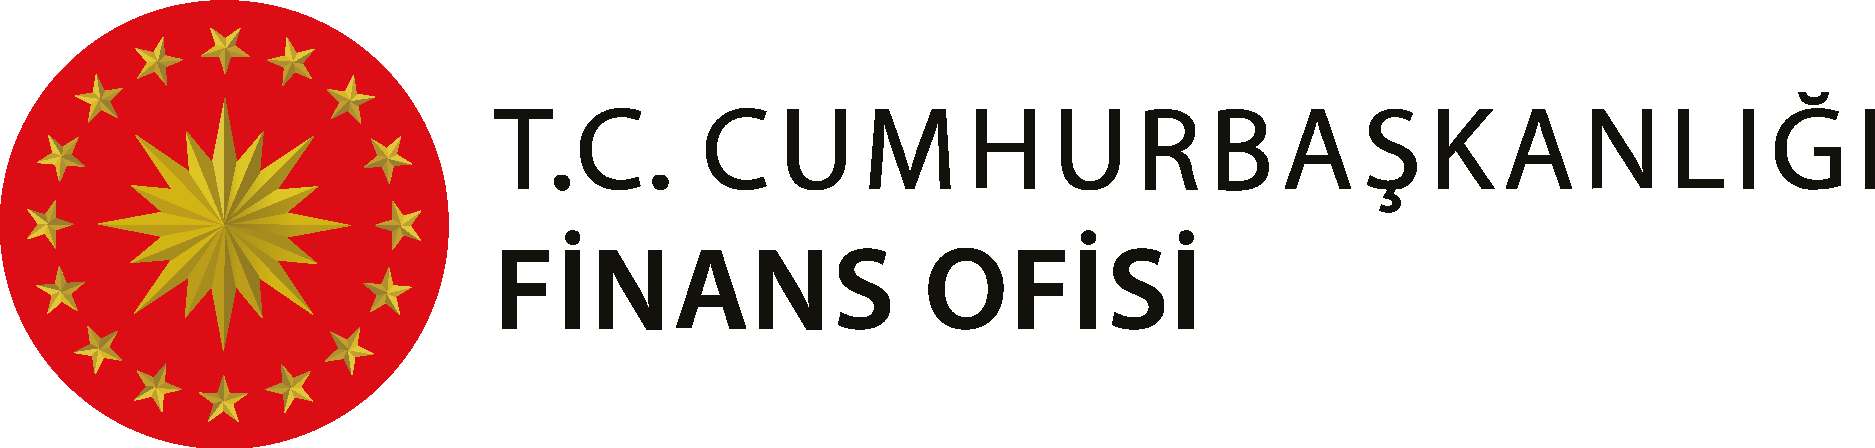 T.C. Cumhurbaşkanlığı Finans Ofisi Logo Vector